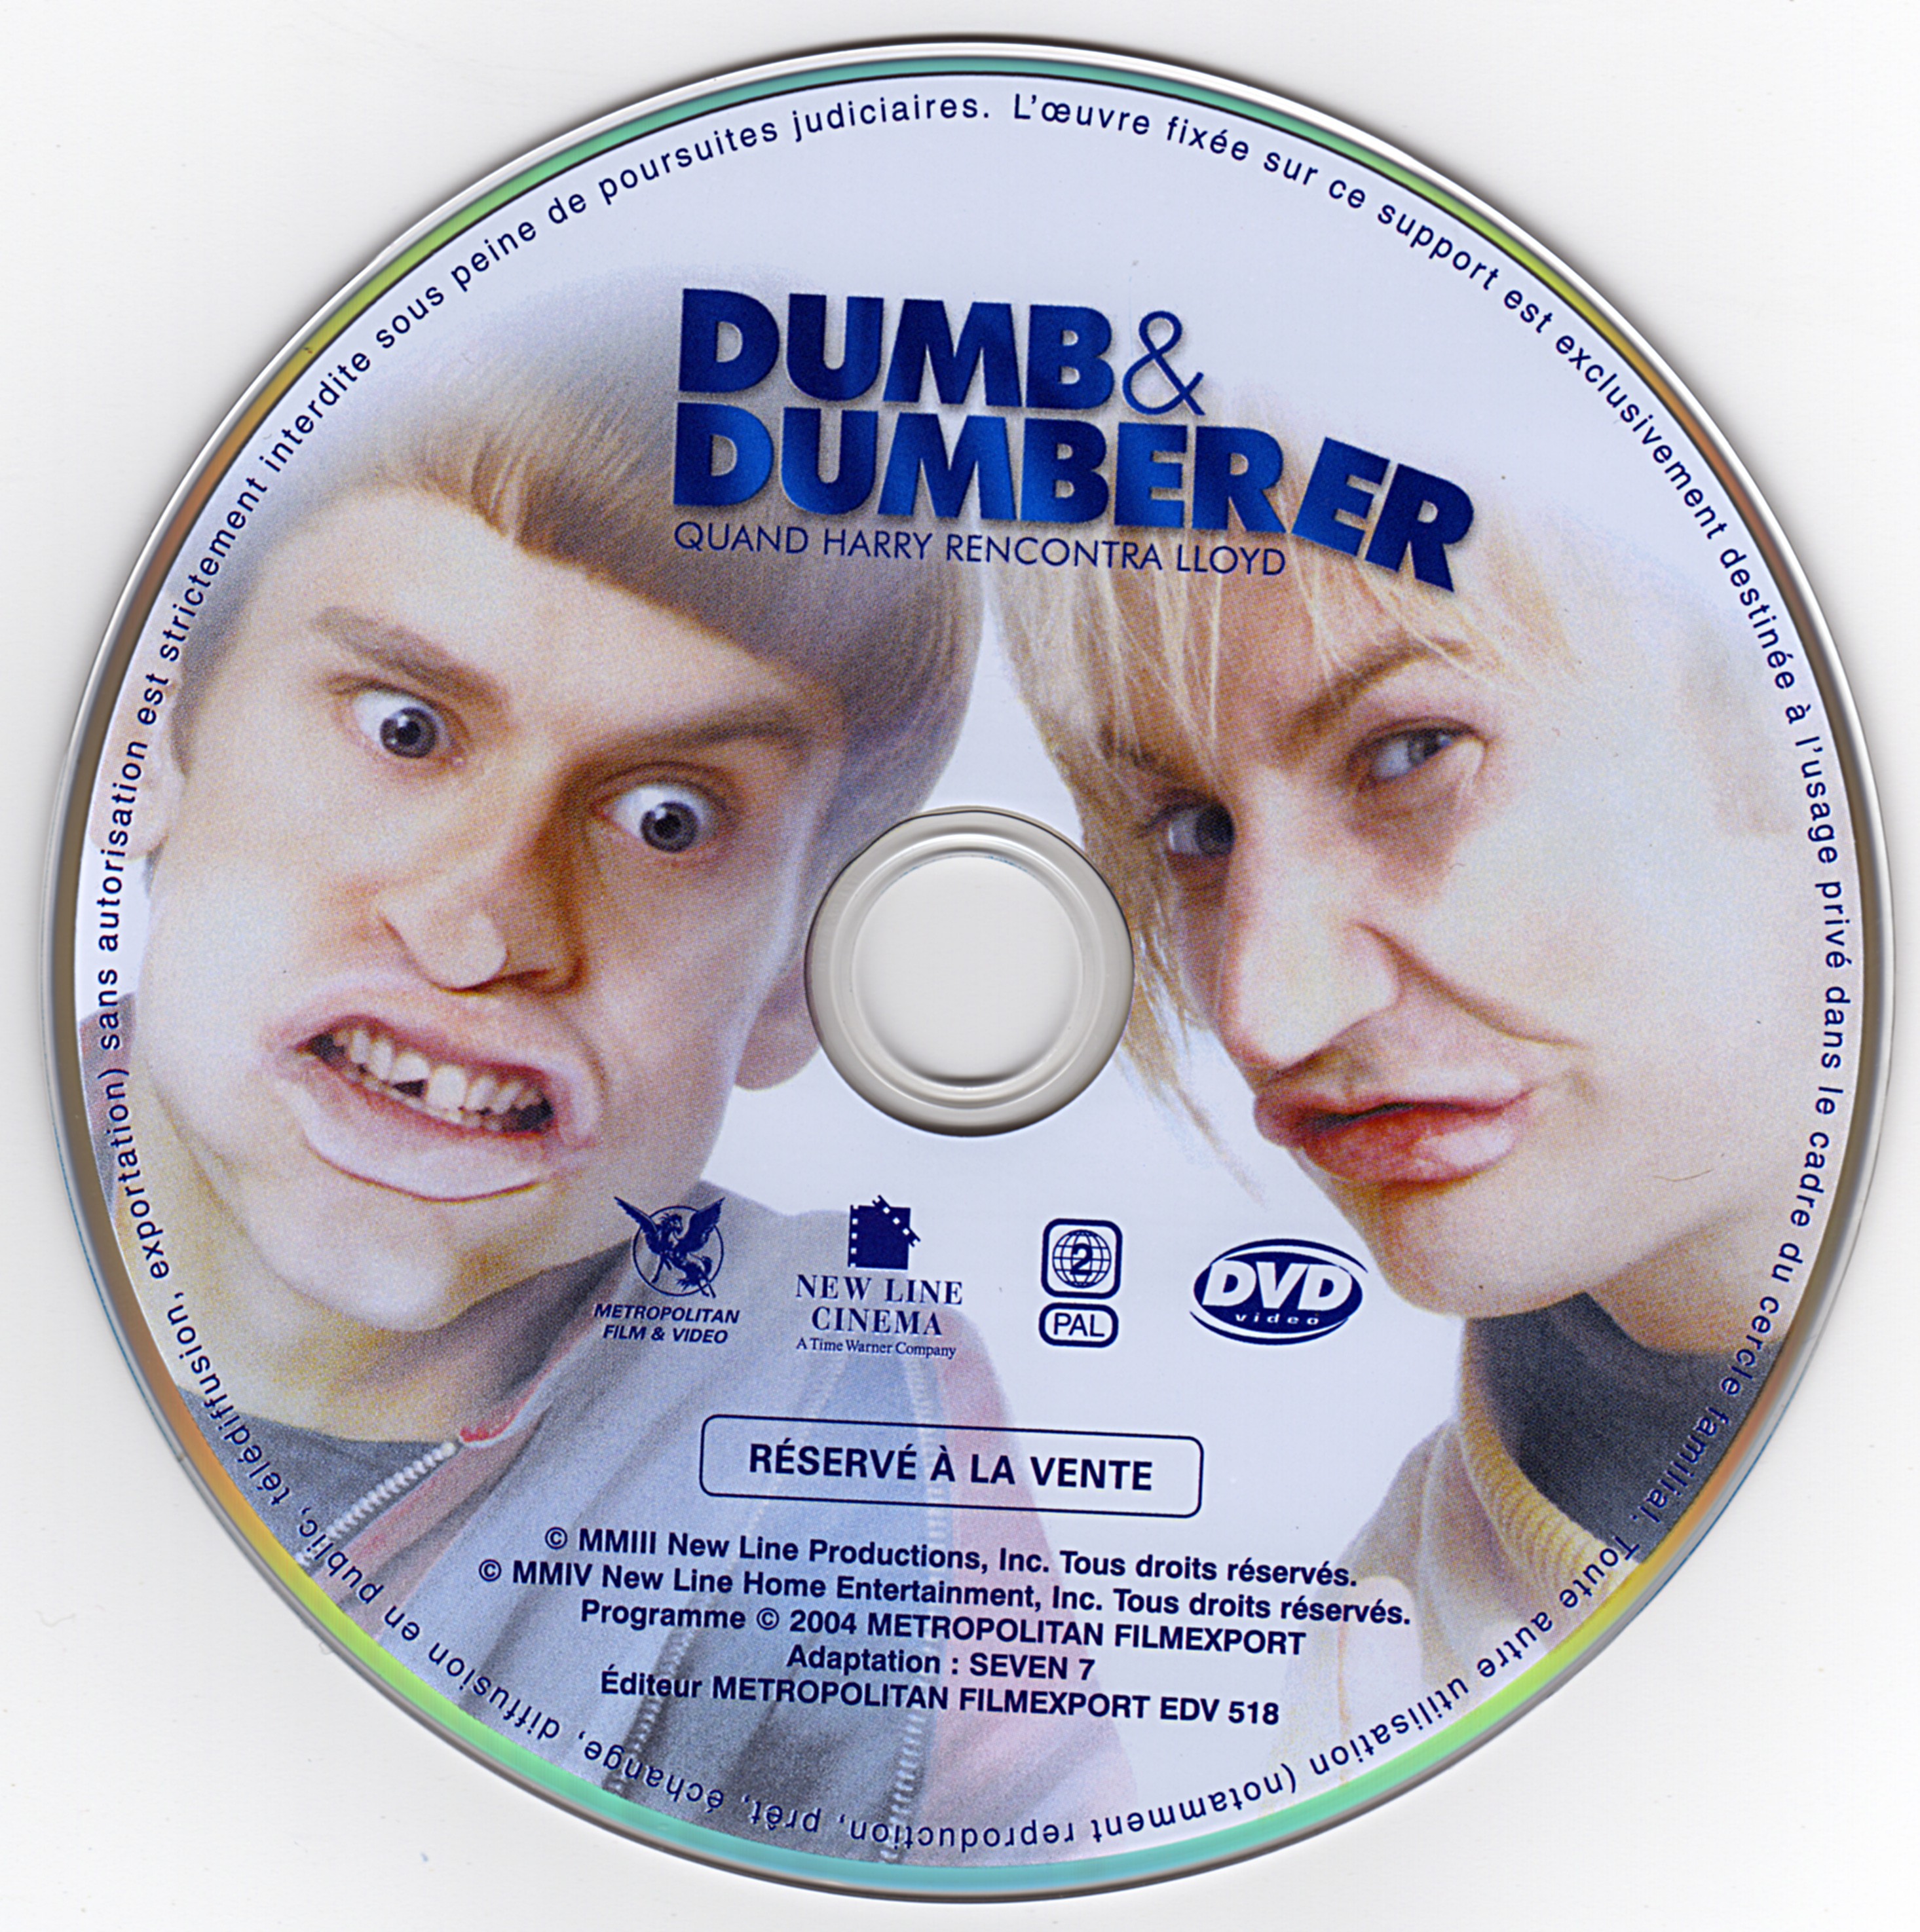 Dumb and dumberer